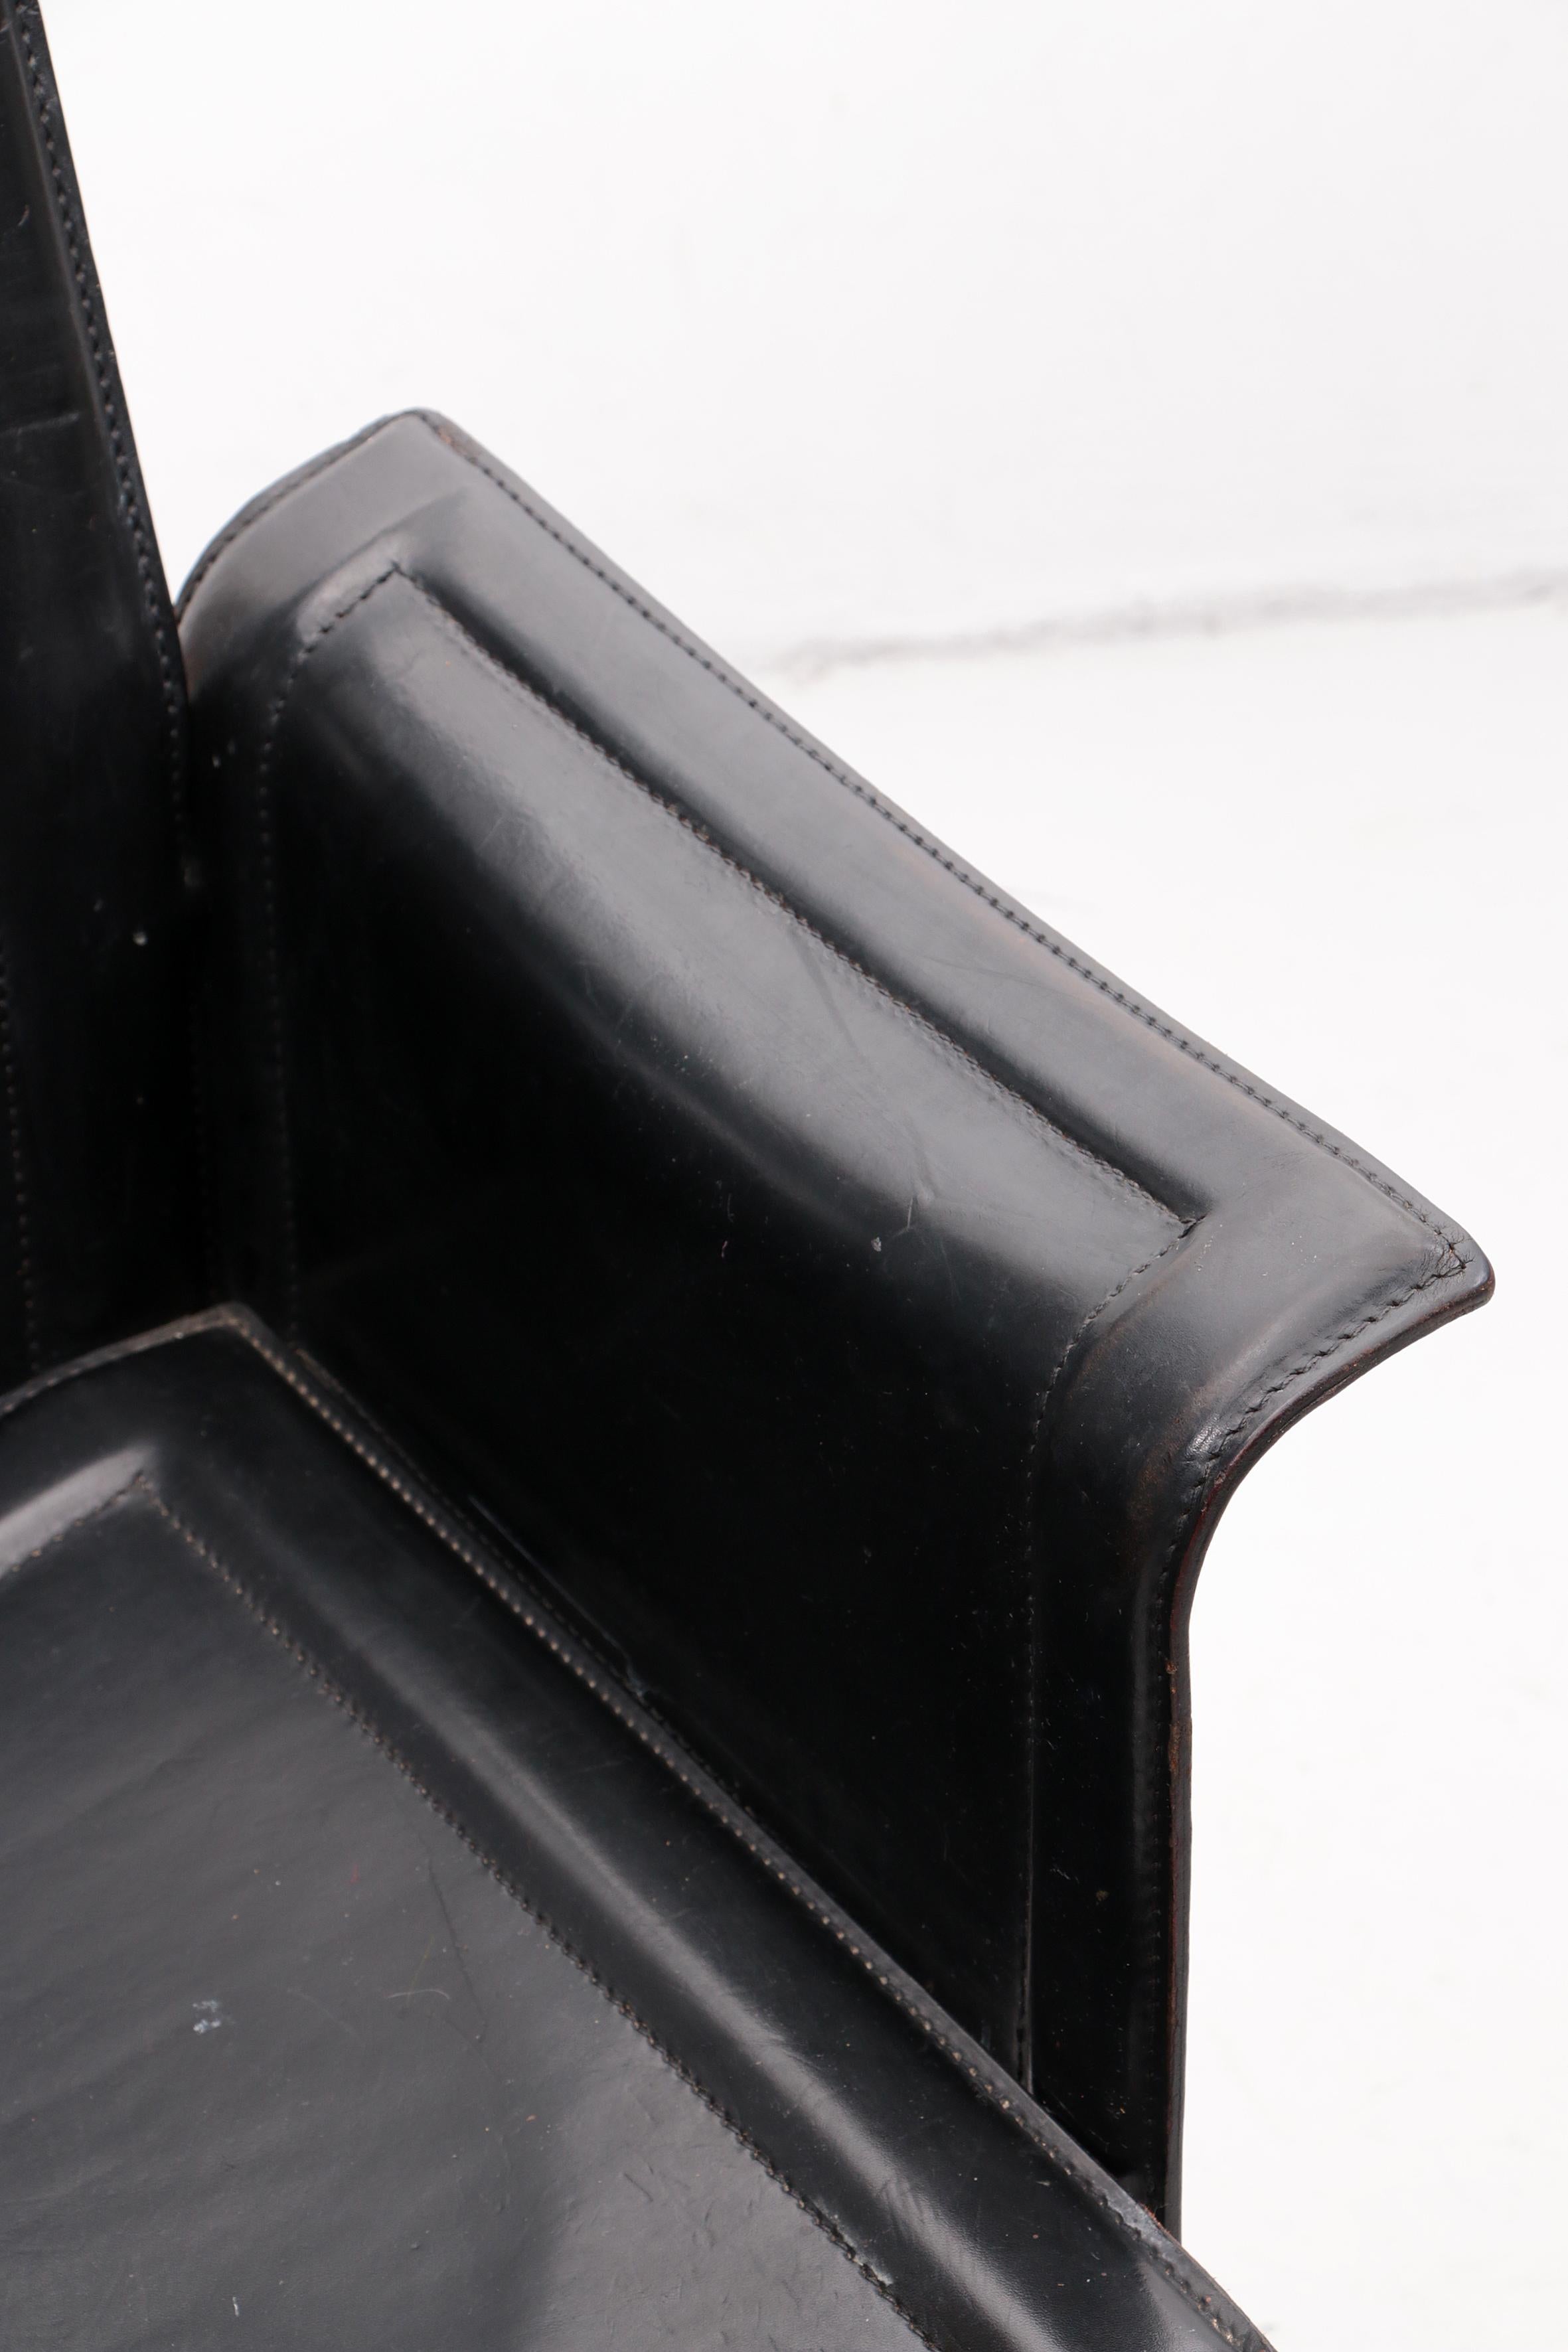 Matteo Grassi Korium Armchair Black Leather, 1970 For Sale 4